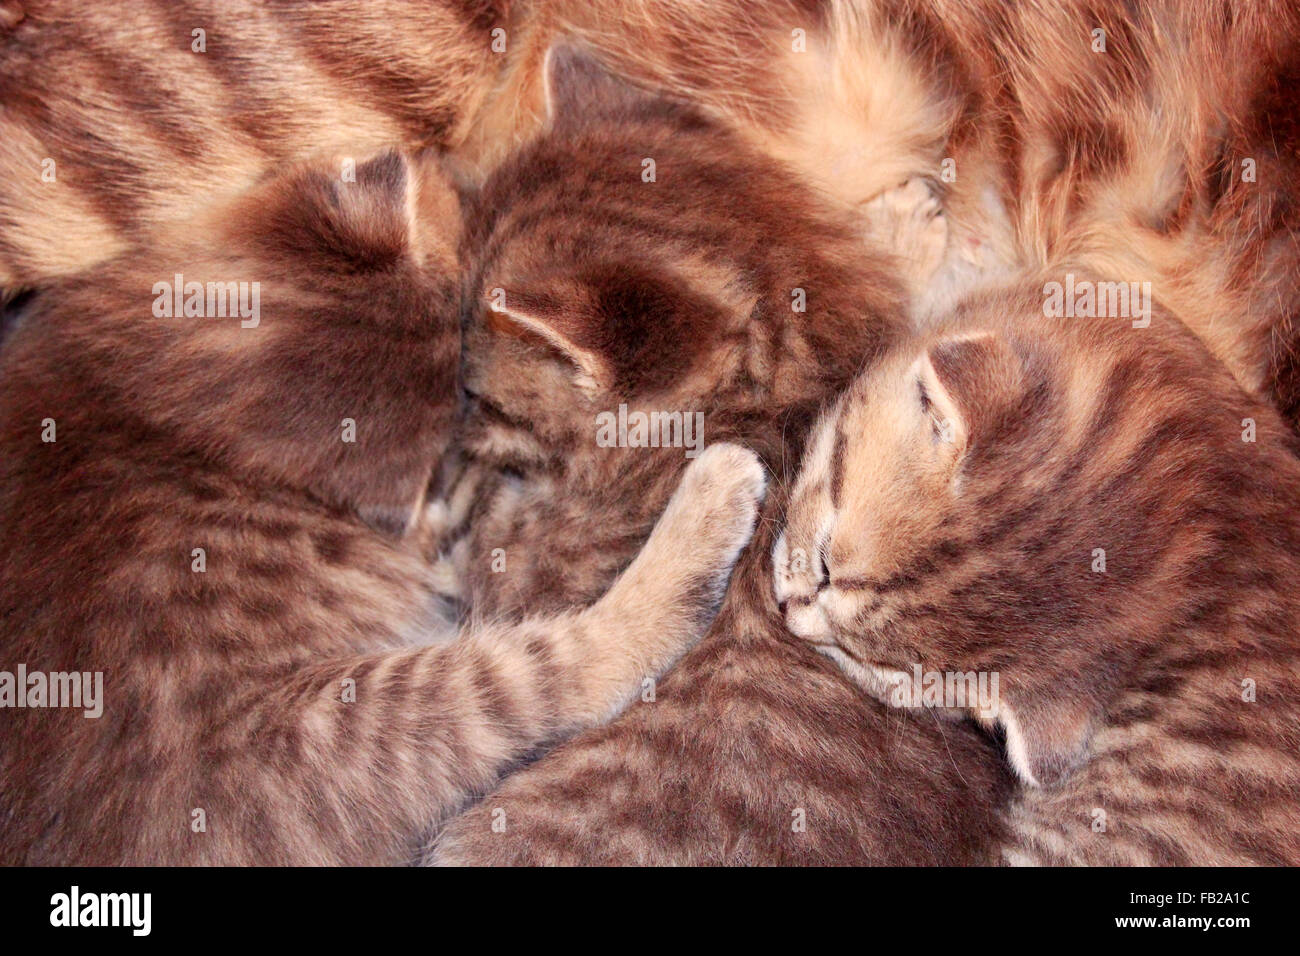 newborn kittens of Scottish Straight breed on their mother Stock Photo